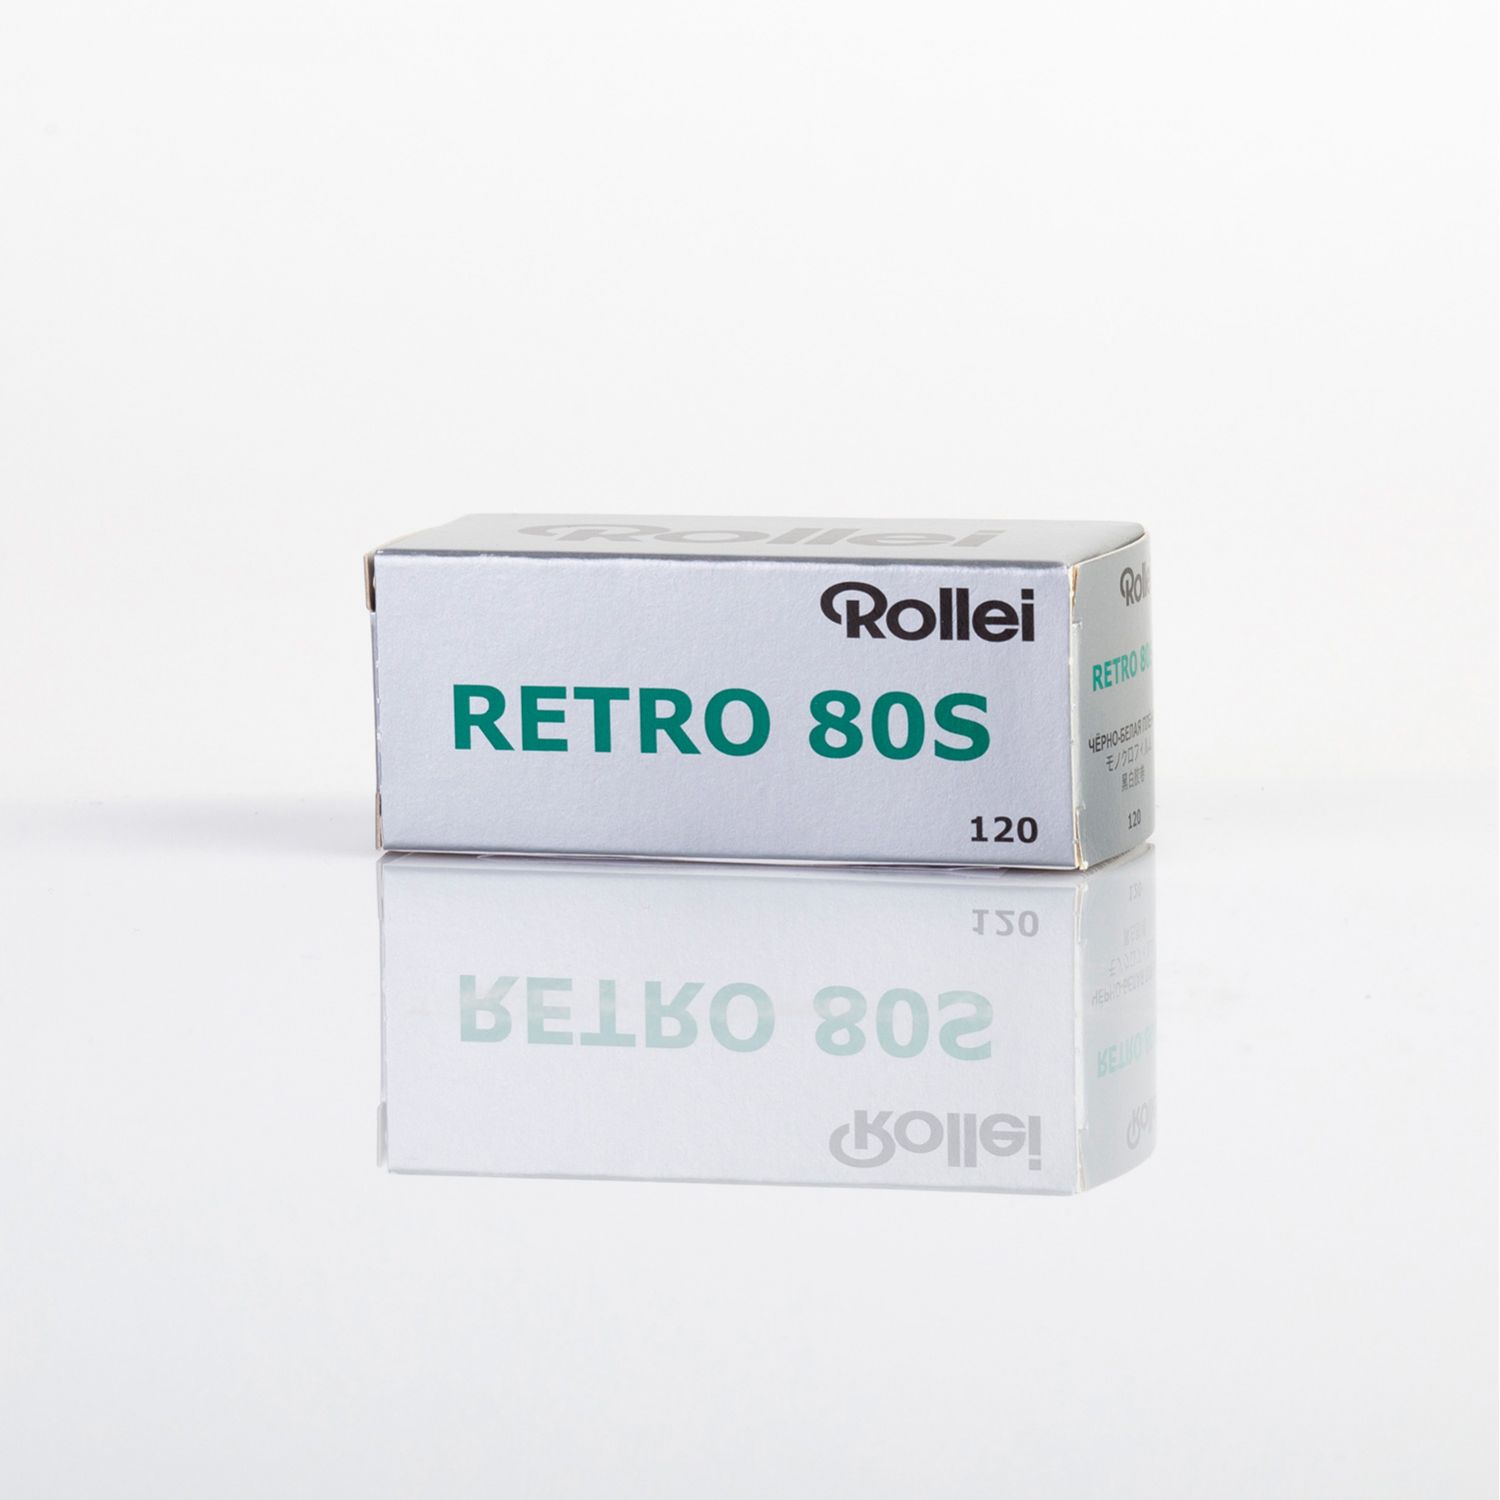 ROLLEI Retro 80S - 1 rouleau 120